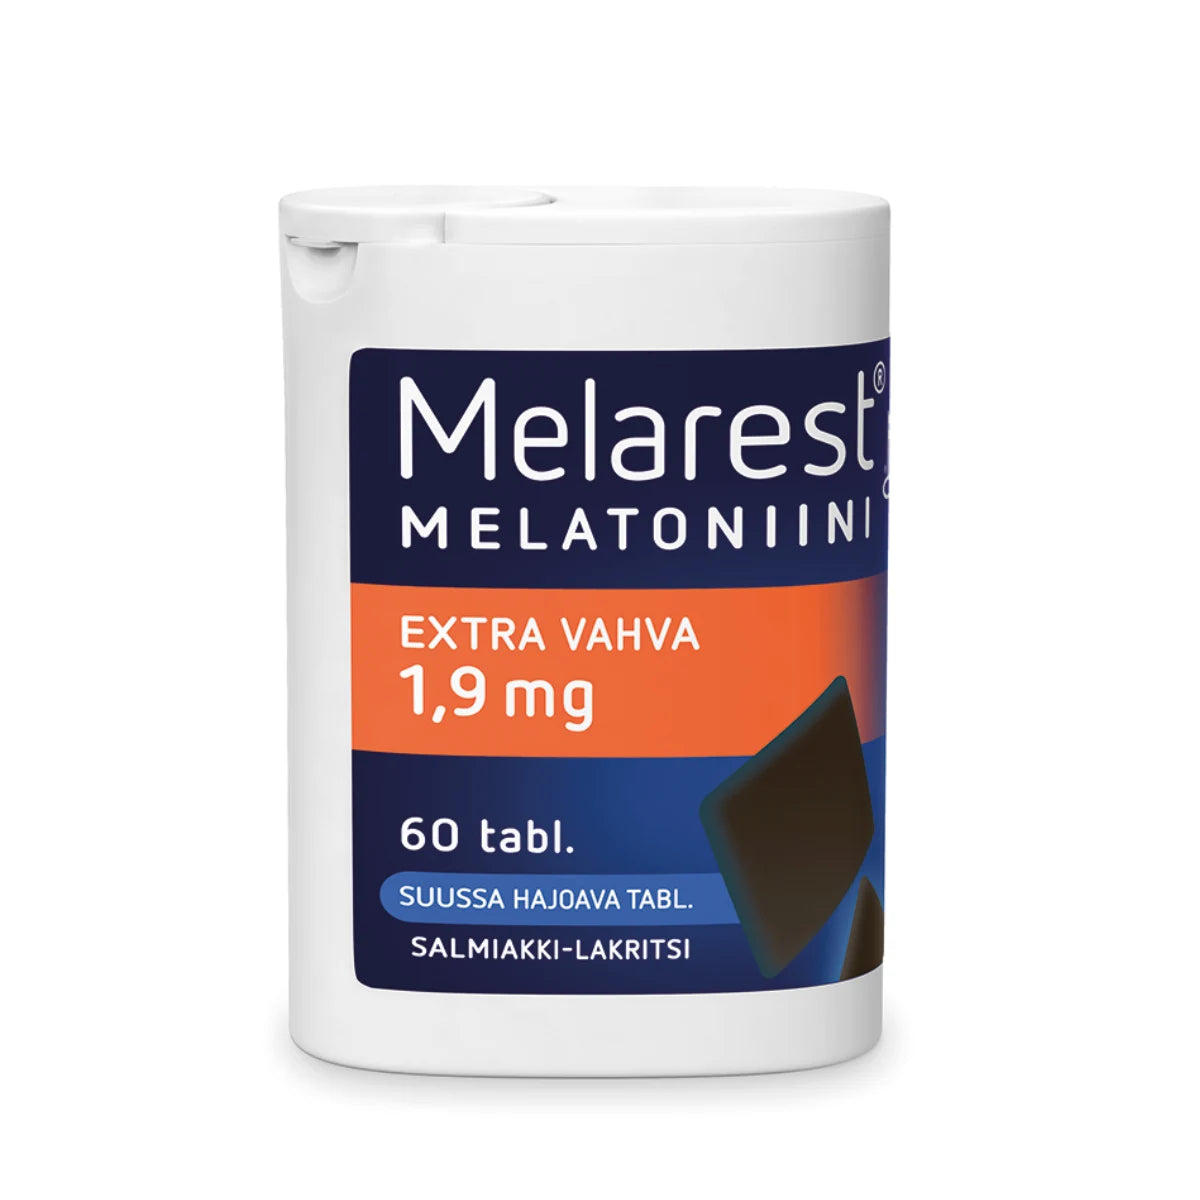 MELAREST Melatoniini Extra Vahva 1,9 mg salmiakki-lakritsi tabletti 60 kpl